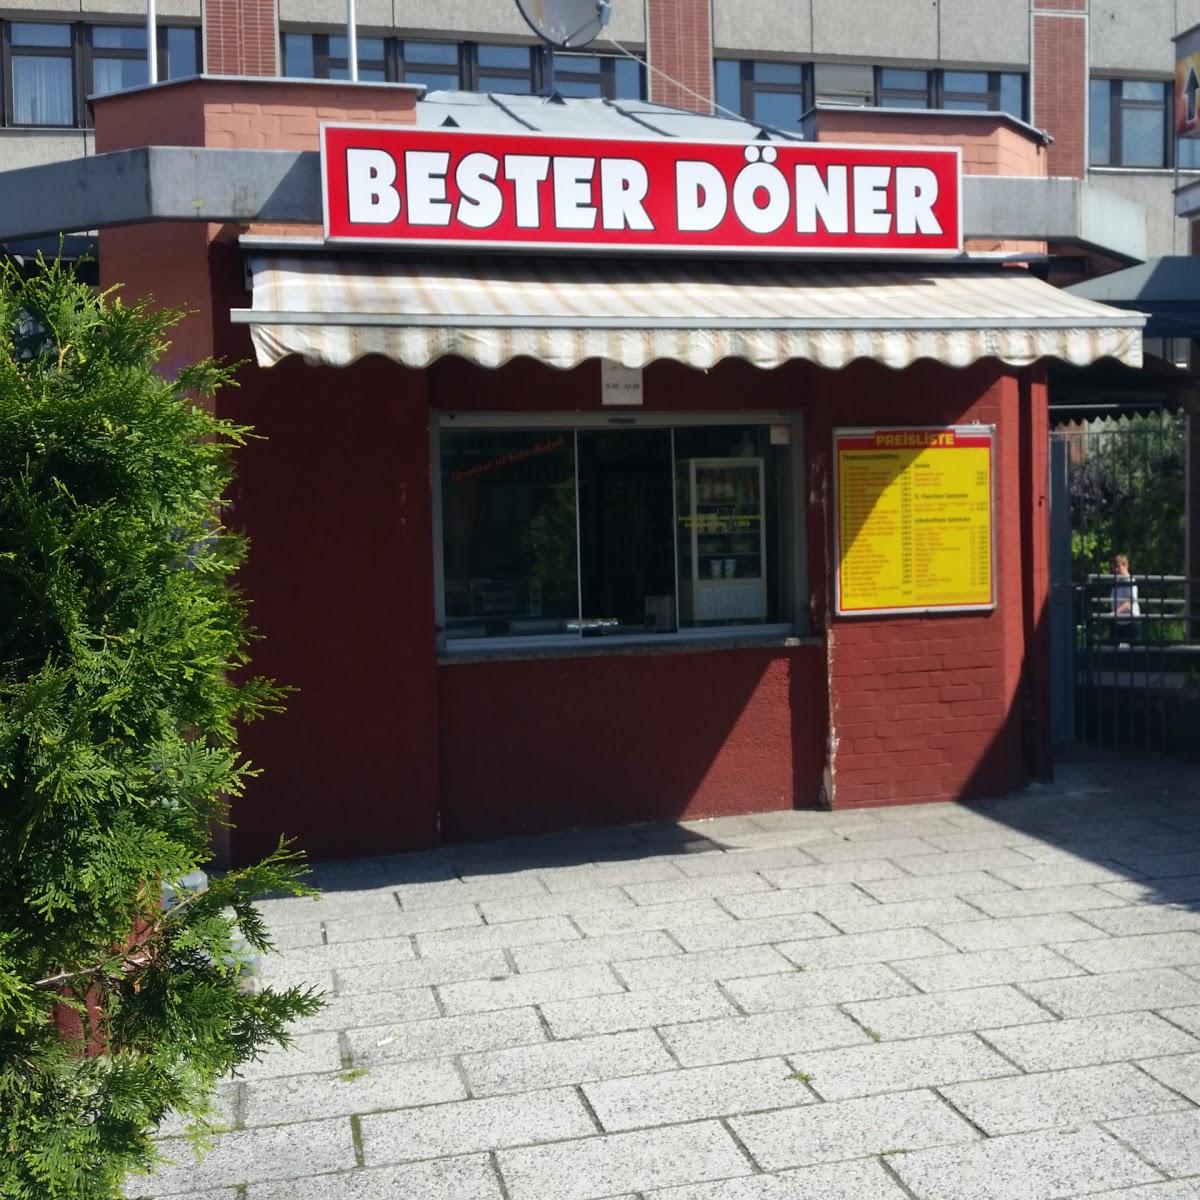 Restaurant "Bester Döner" in Berlin